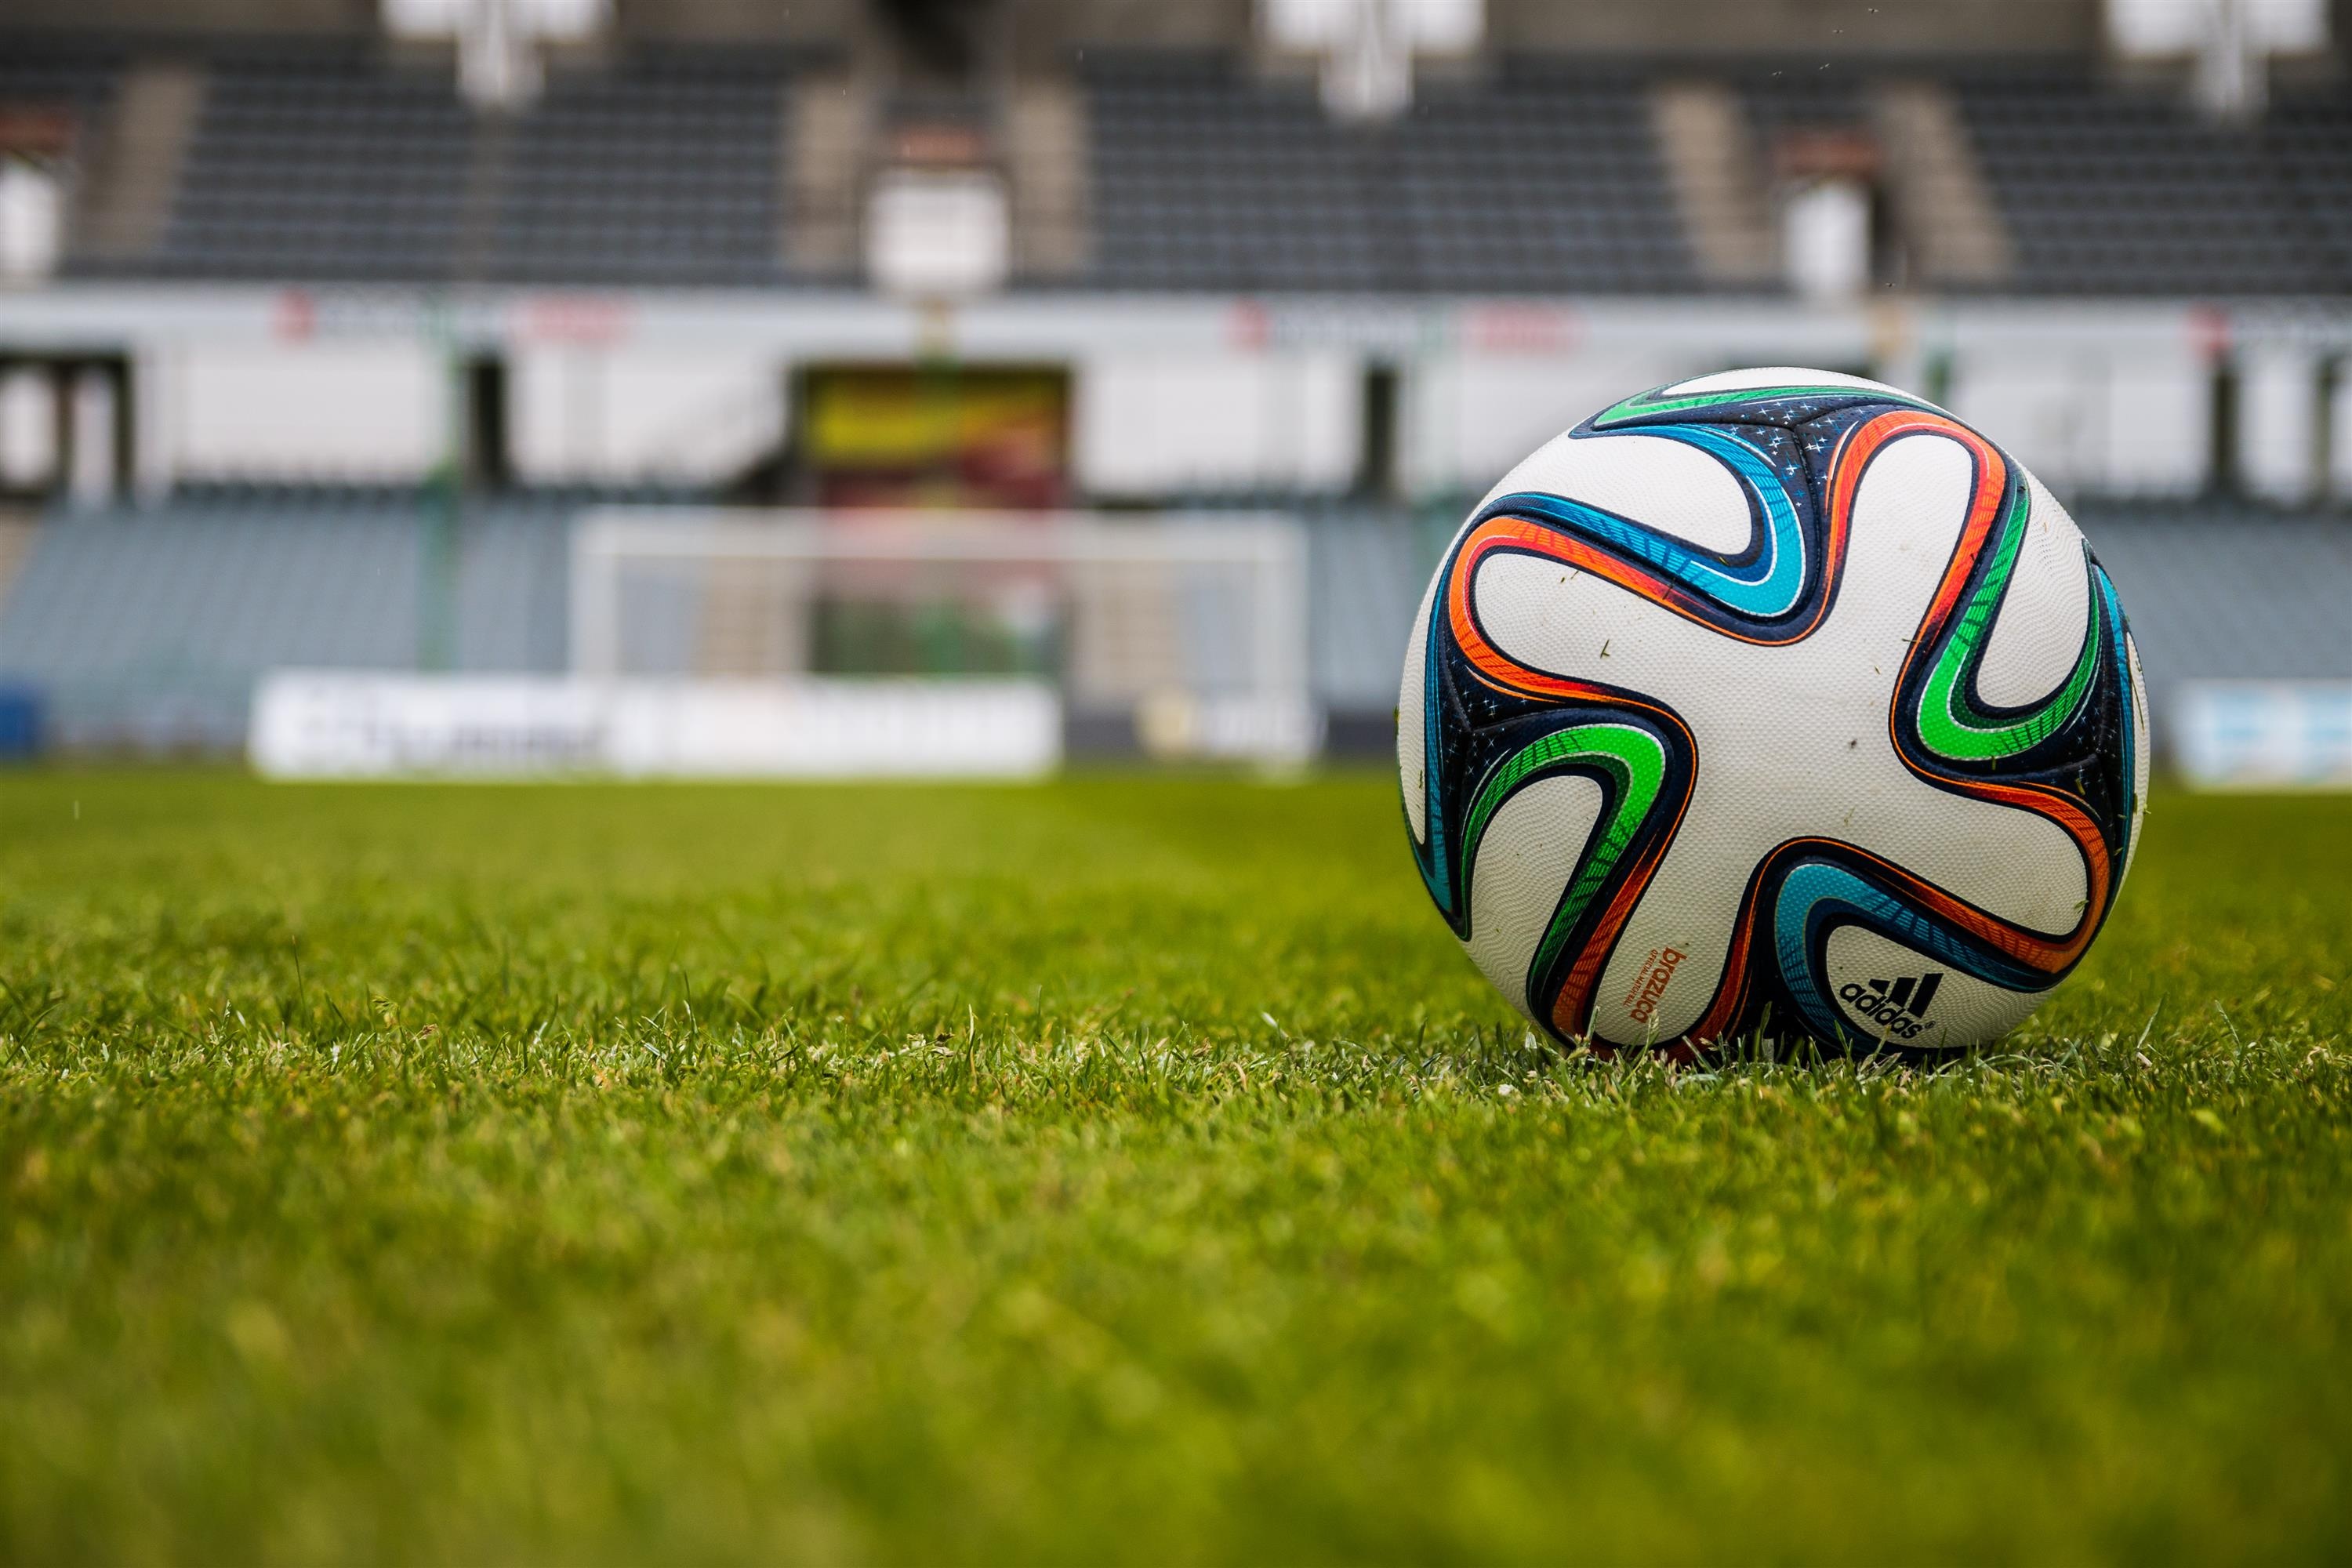 A soccer ball on a soccer field